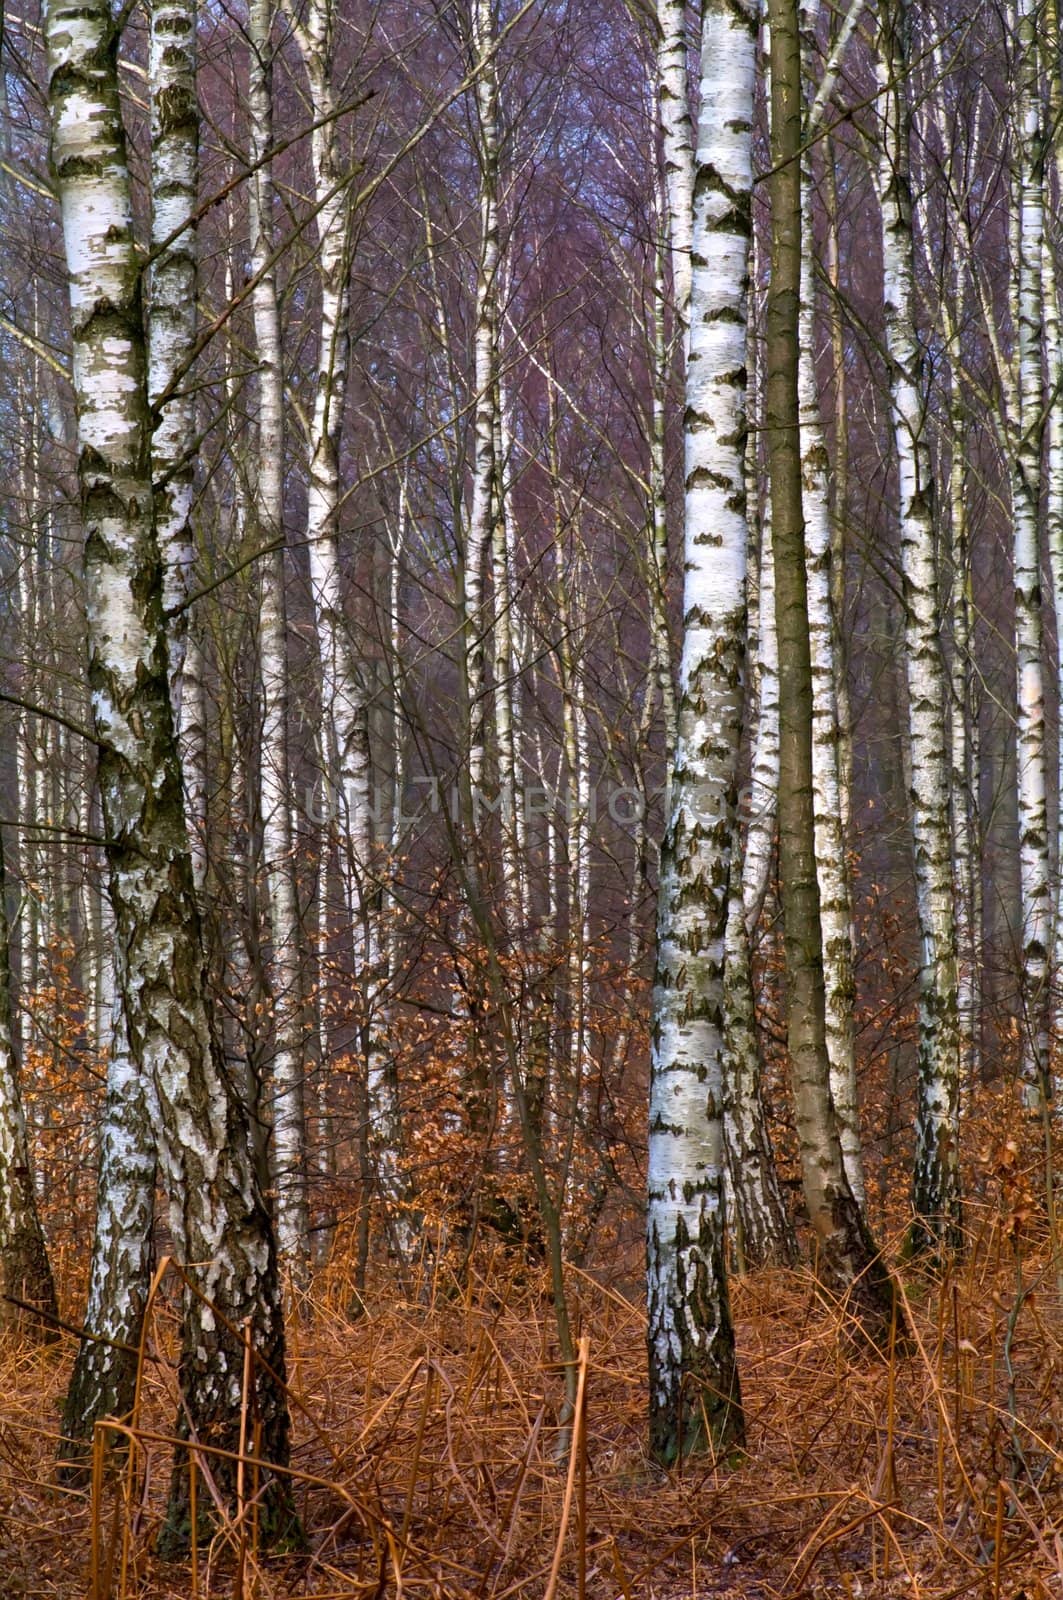 Birch trunks by baggiovara